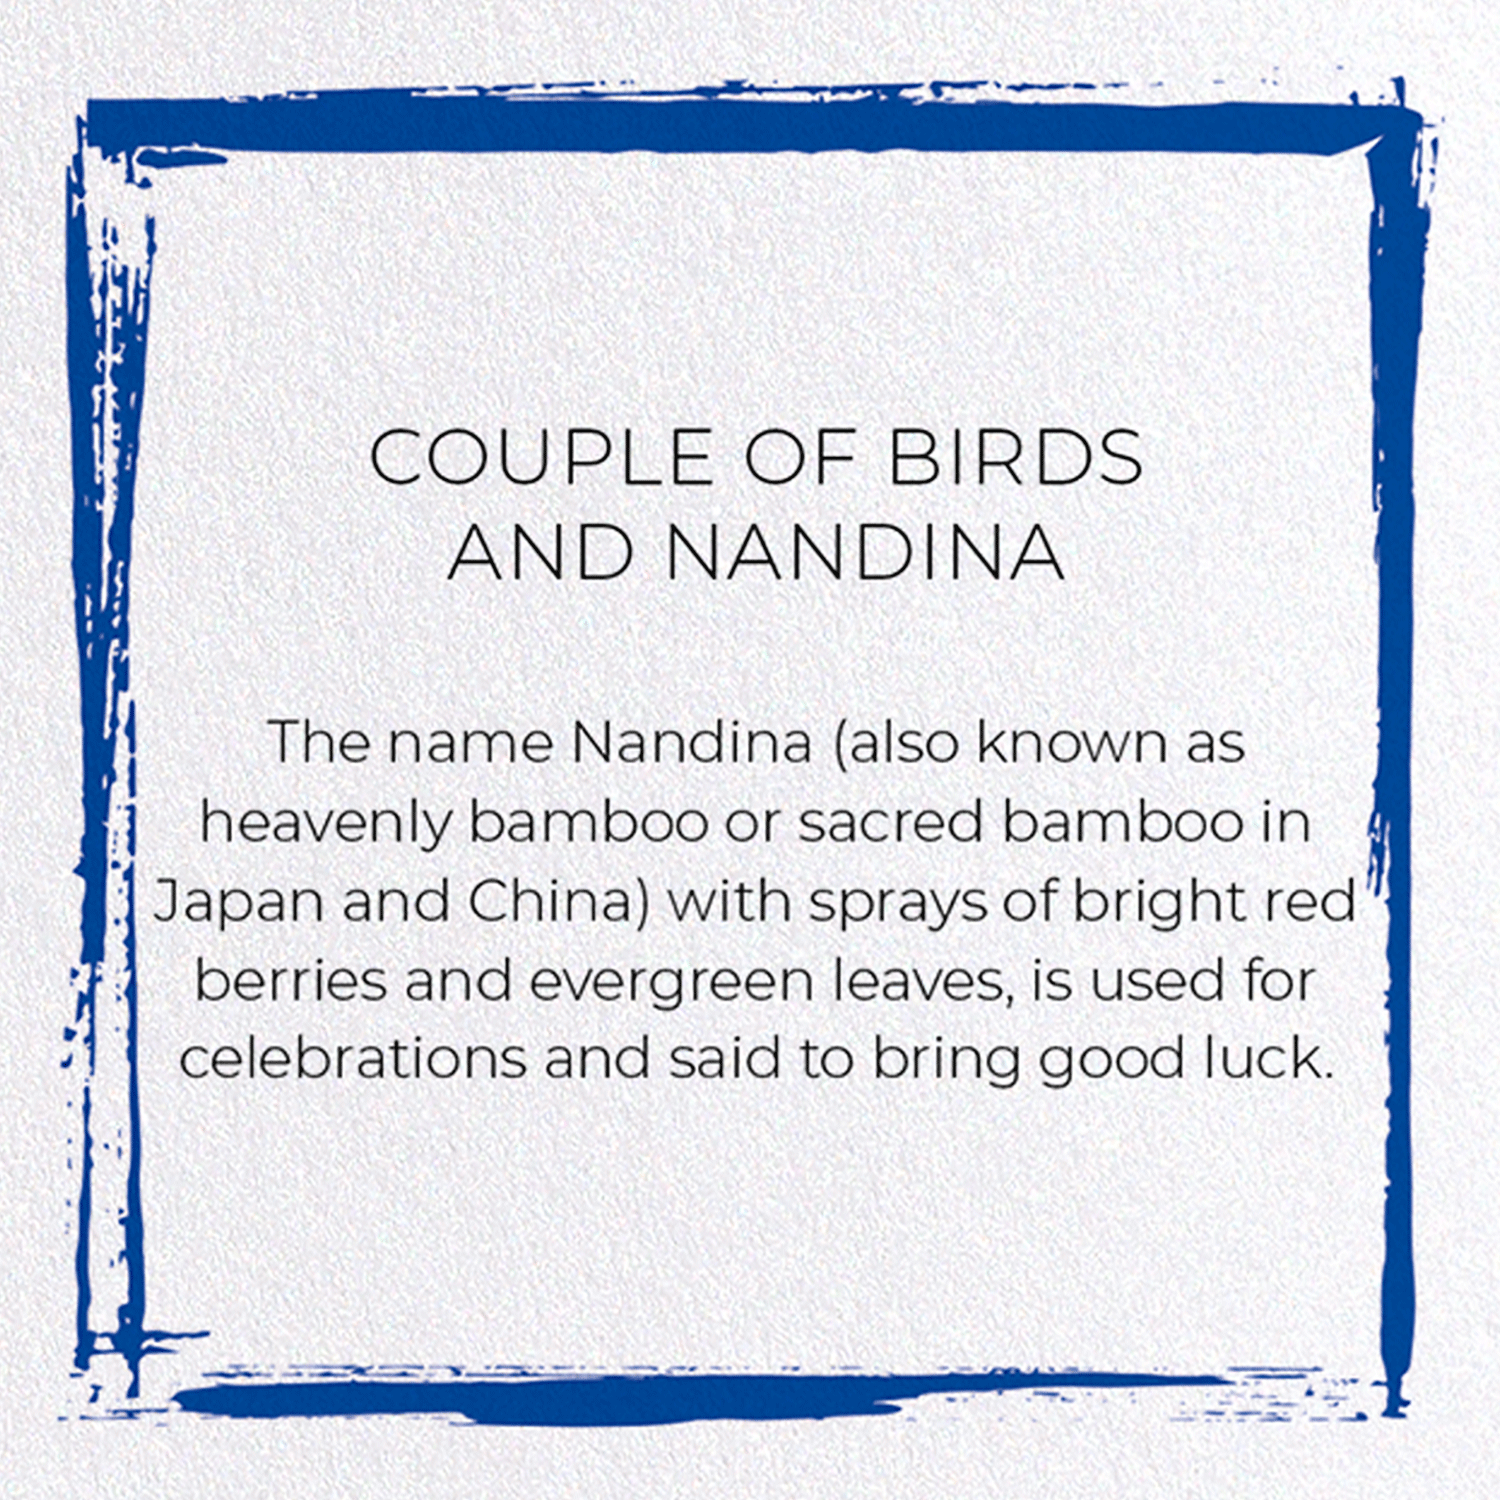 COUPLE OF BIRDS AND NANDINA